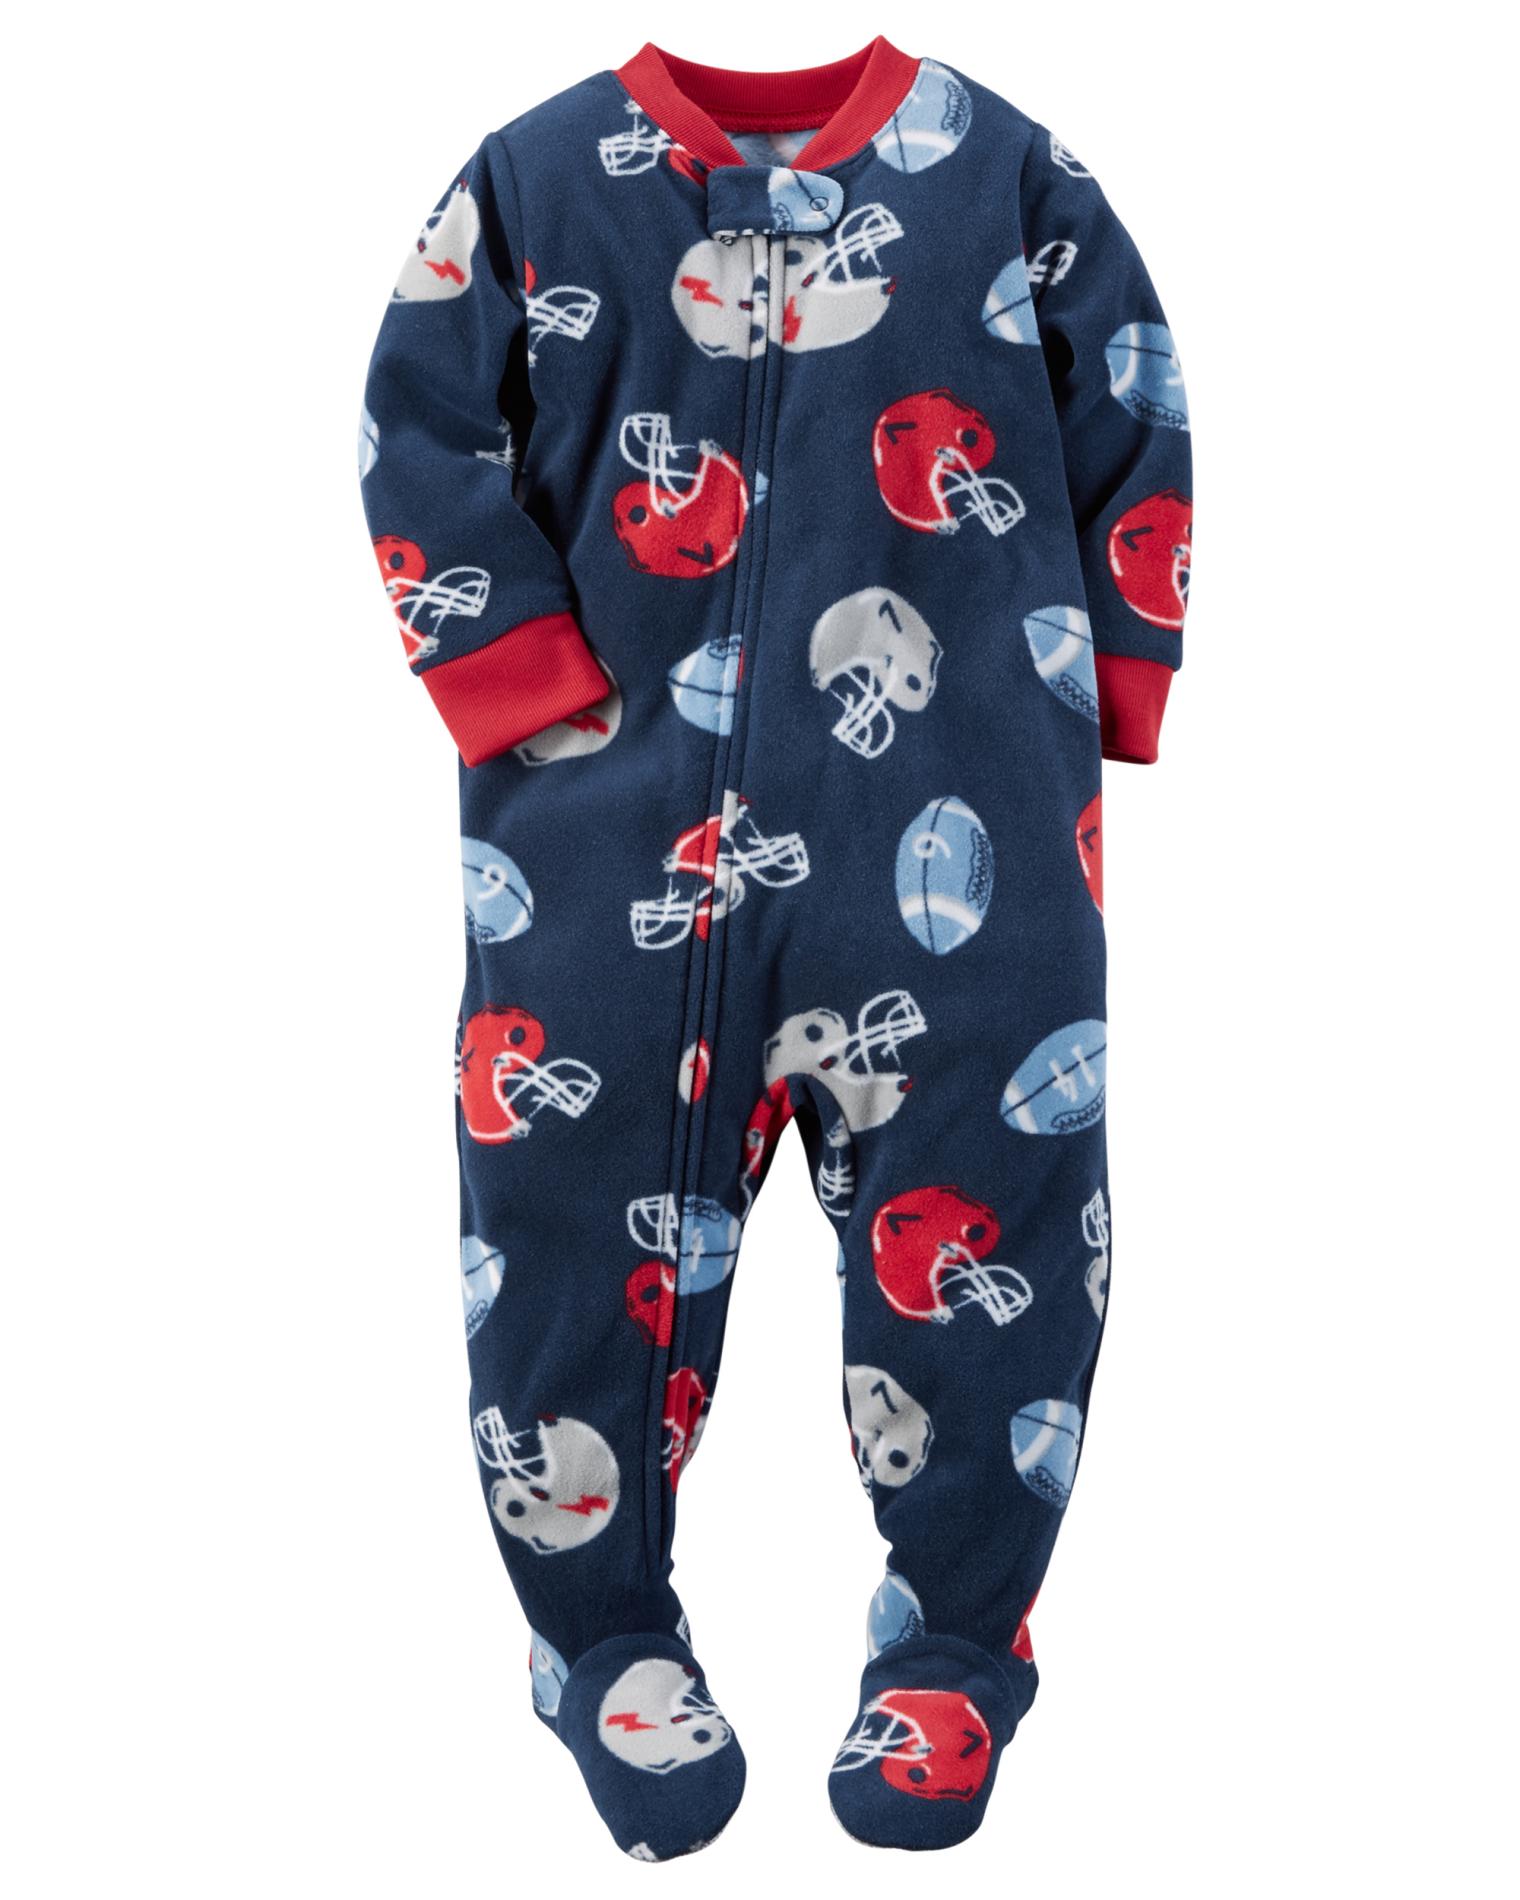 Carter's Infant & Toddler Boys' Fleece Sleeper Pajamas Football